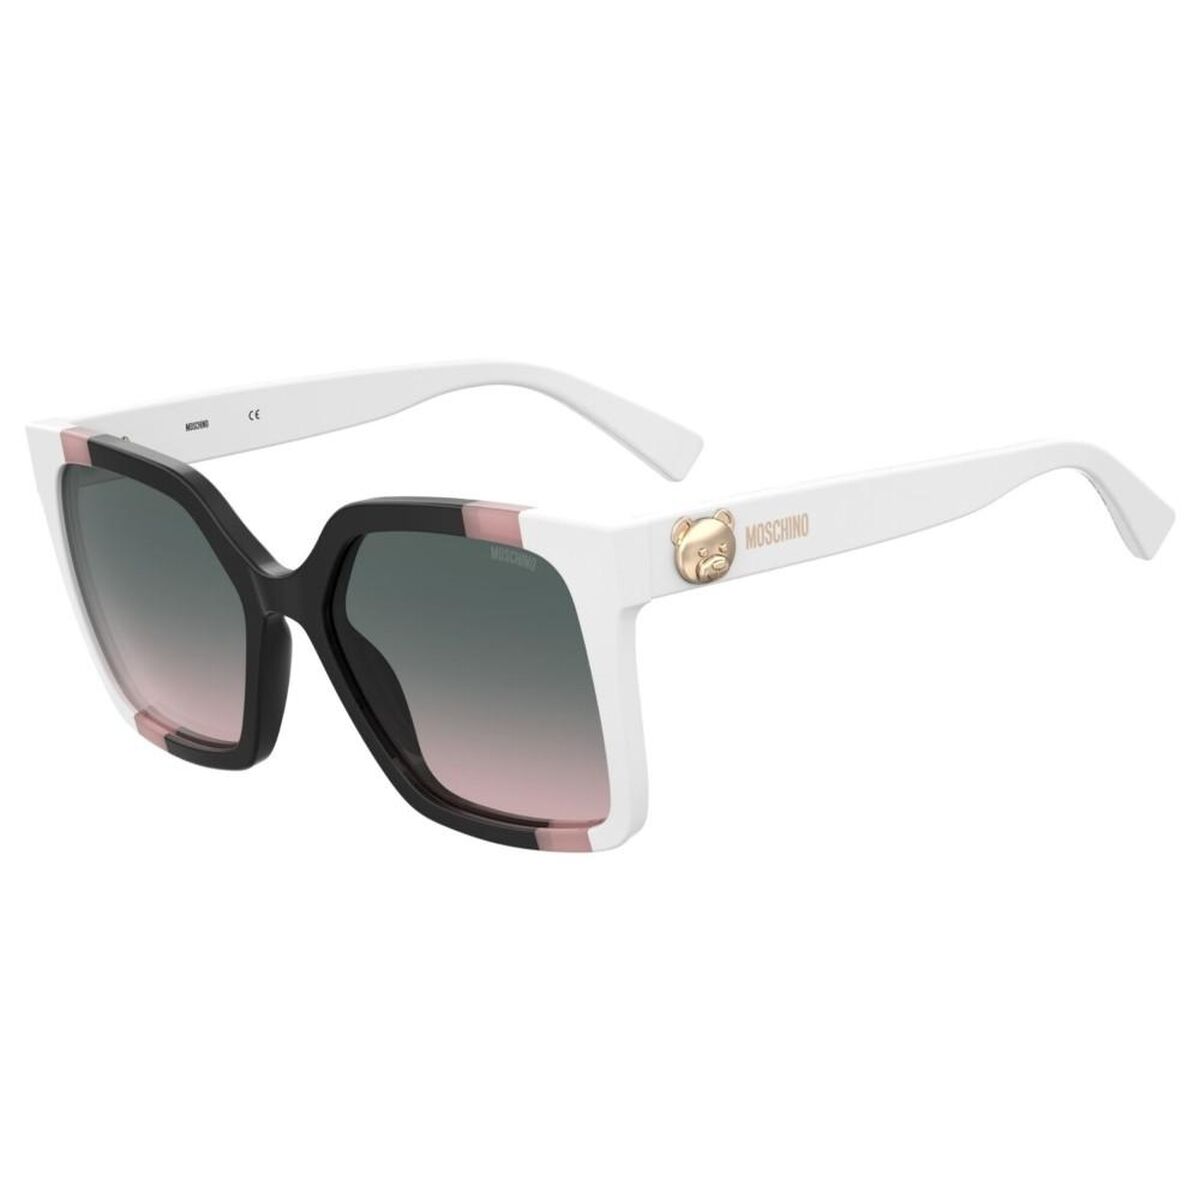 Kaufe Damensonnenbrille Moschino MOS123_S bei AWK Flagship um € 229.00